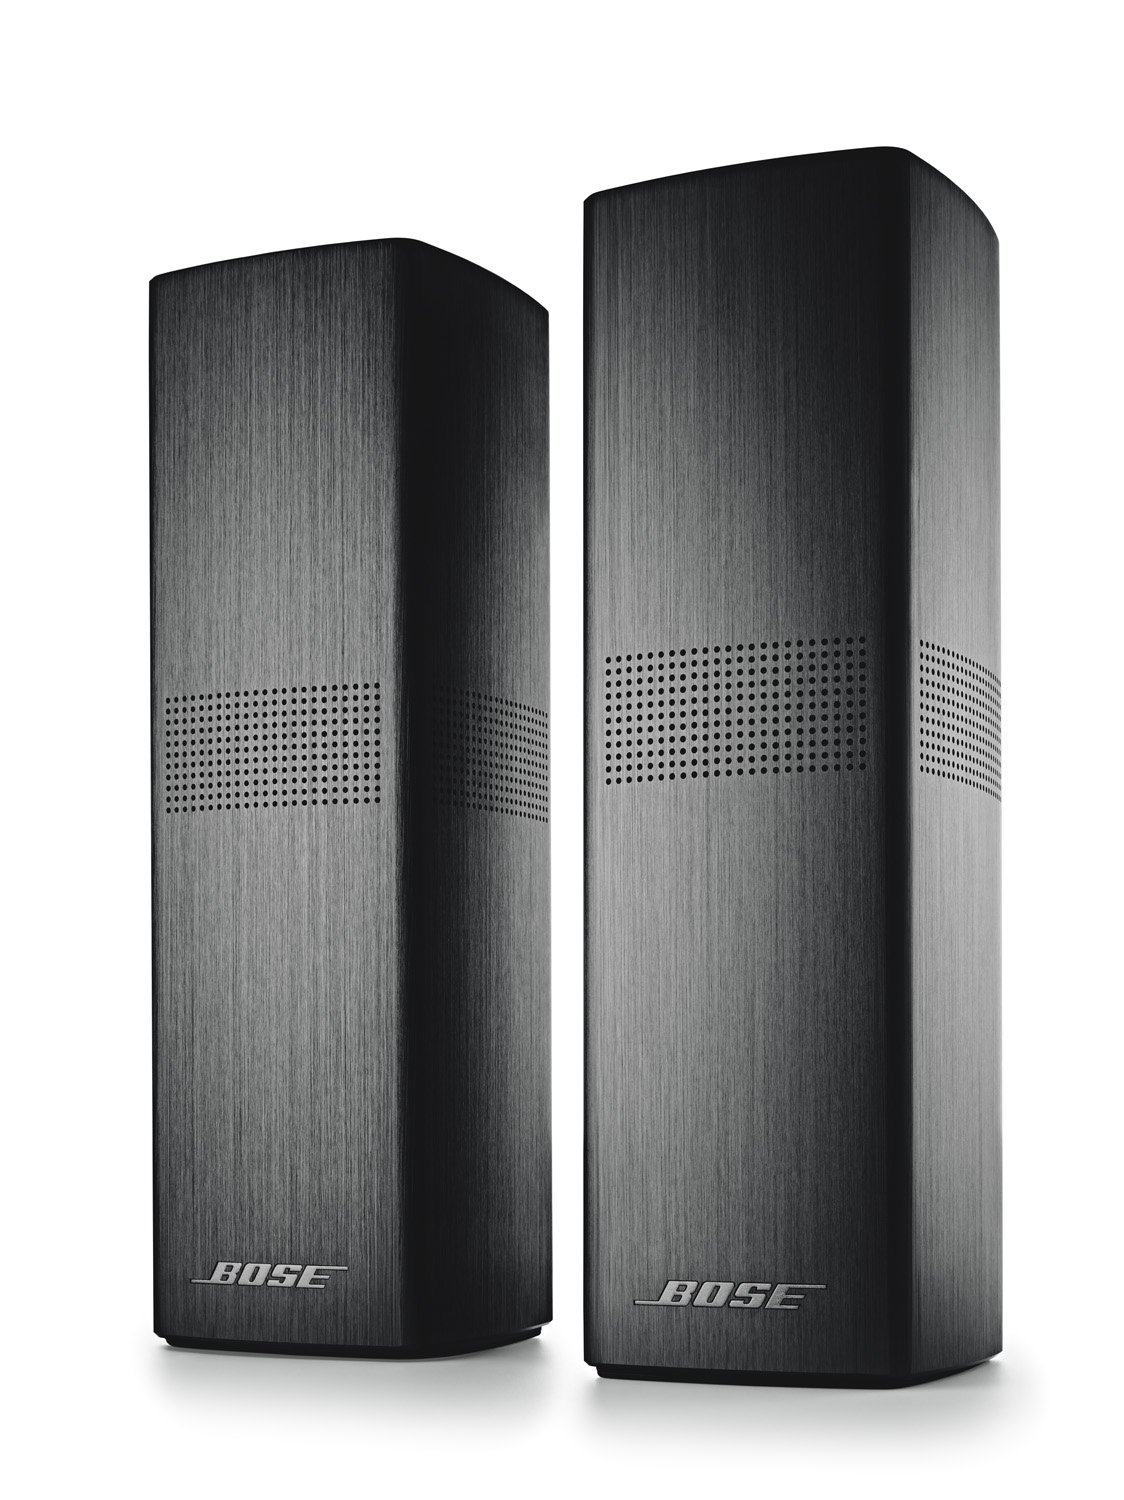 Two black Bose omnijewel speakers